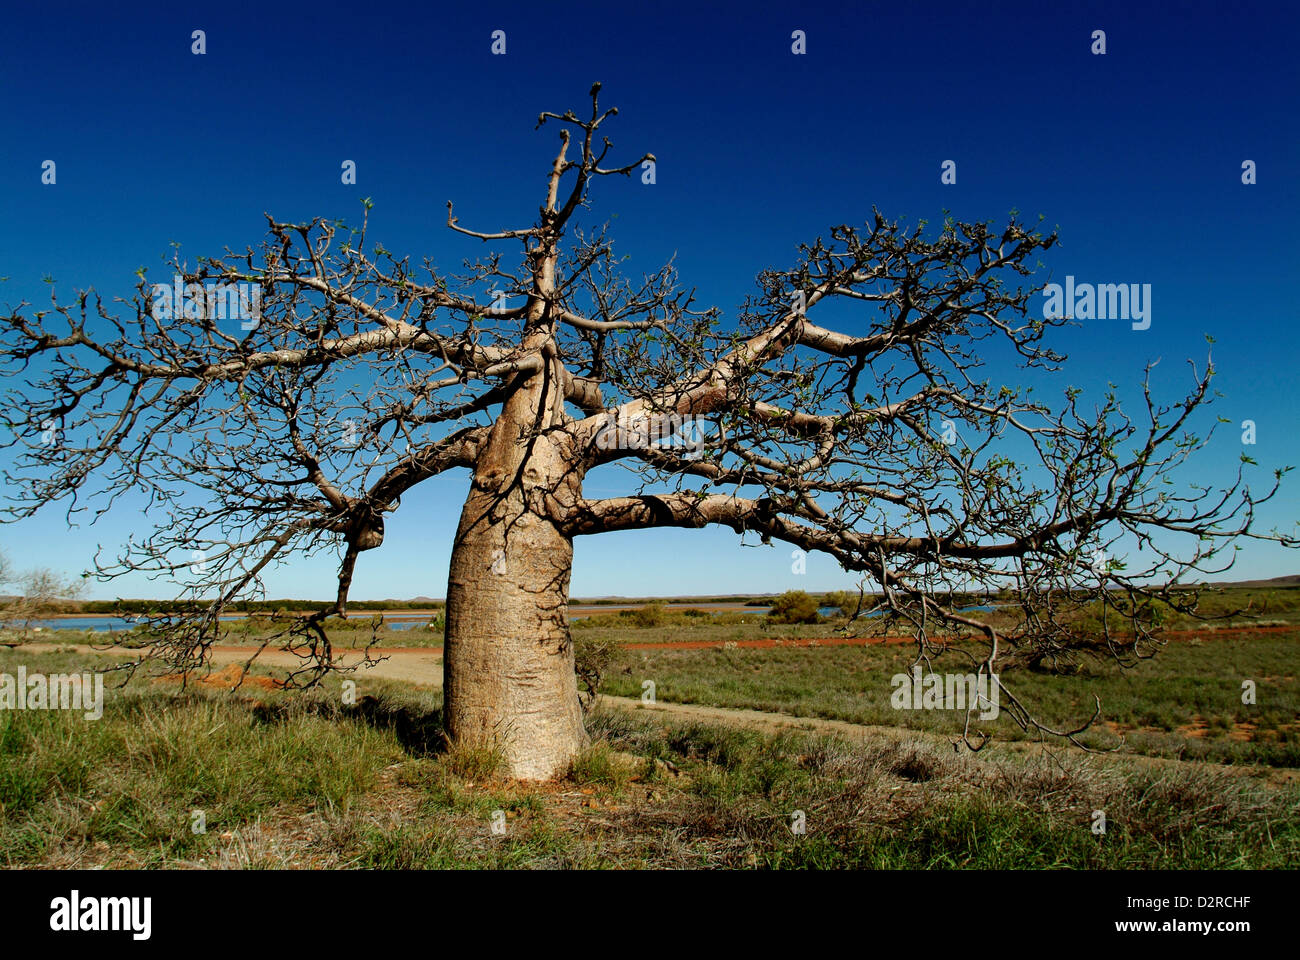 Adansonia digitata, Baobab, Brown. Stock Photo